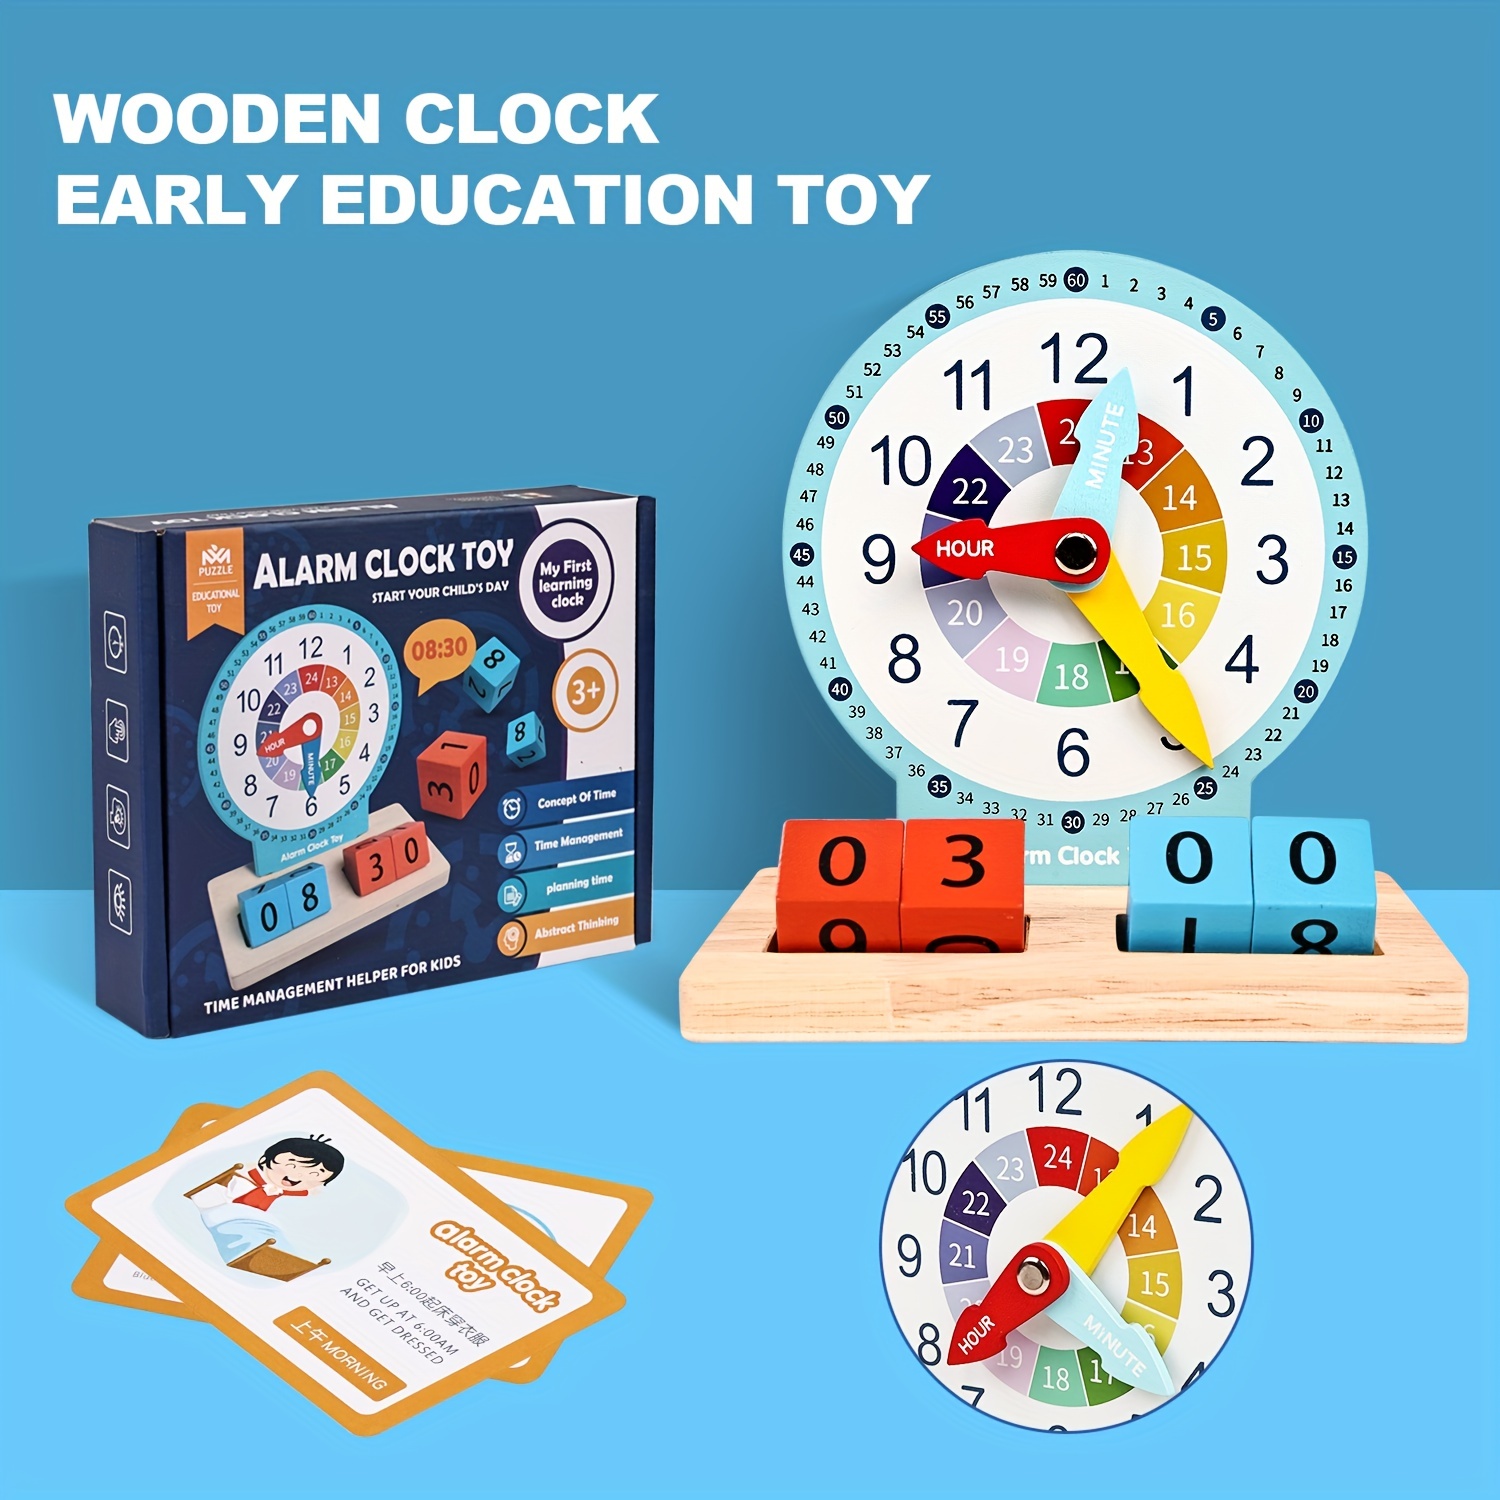 relojes para niño niña reloj juguetes doll niños reloj regalo 7,8,9,10,12  años